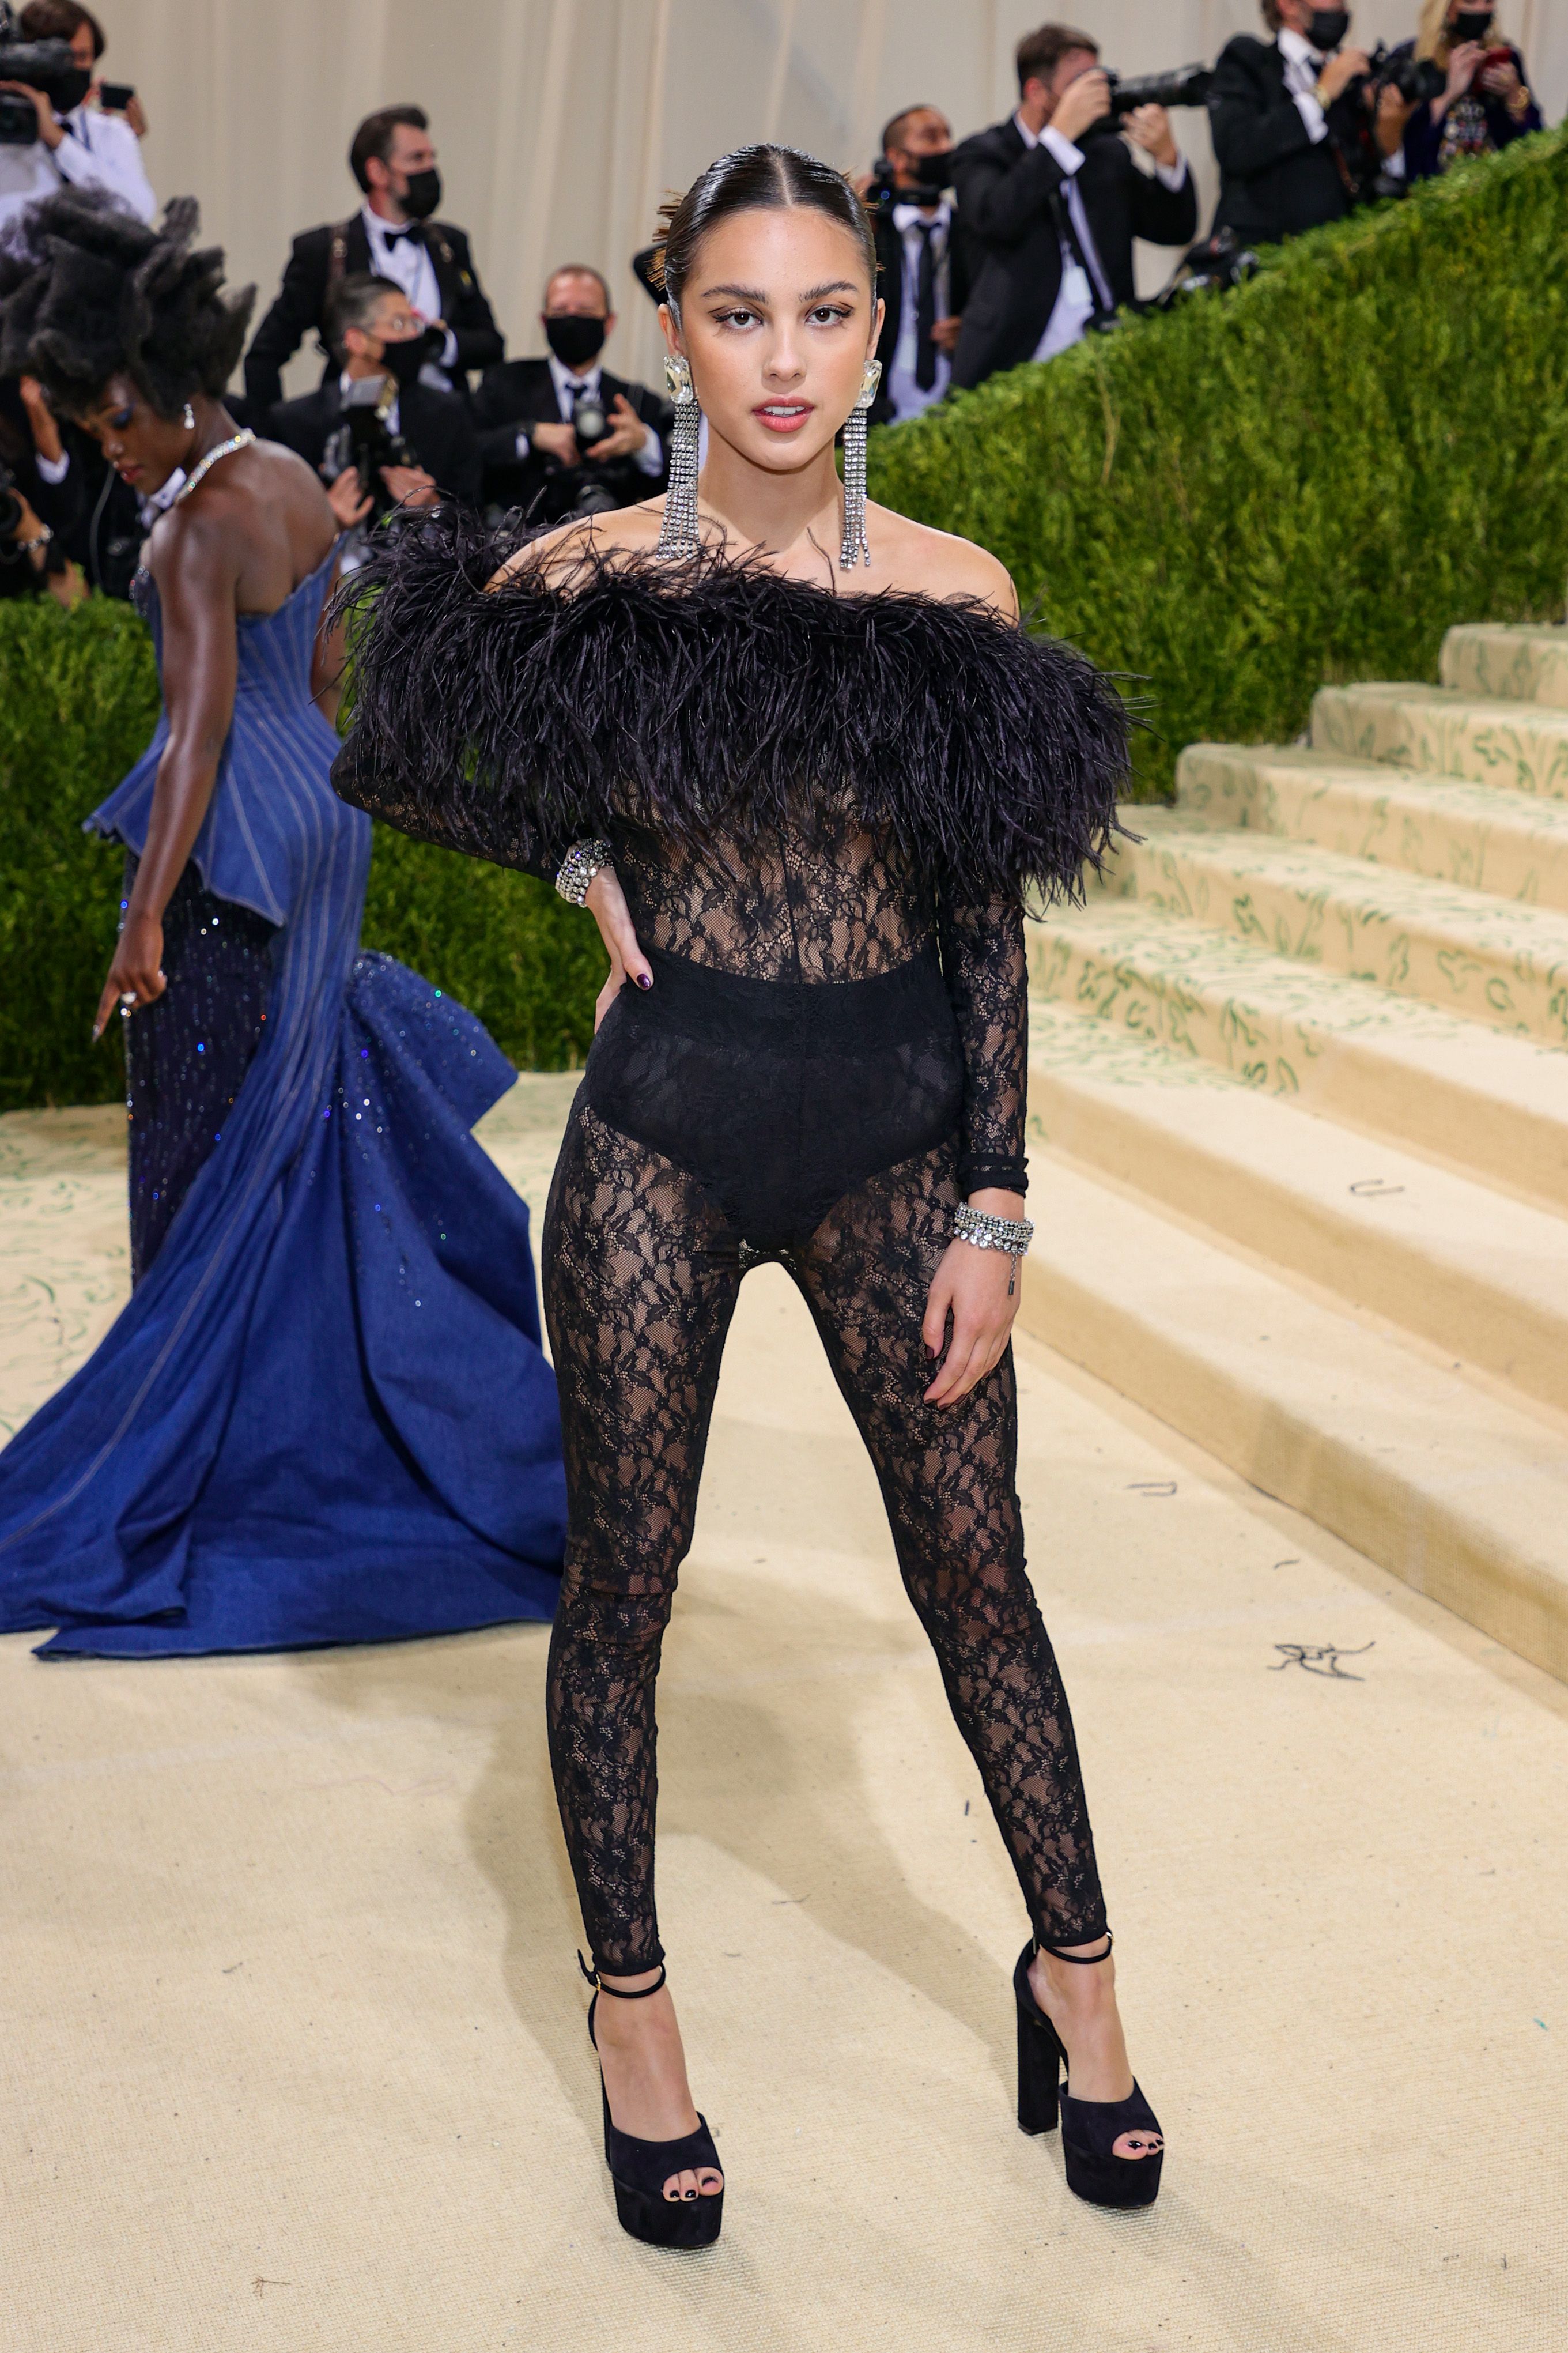 Olivia Rodrigo Models Sheer Dress at Grammy Awards Red Carpet 2023